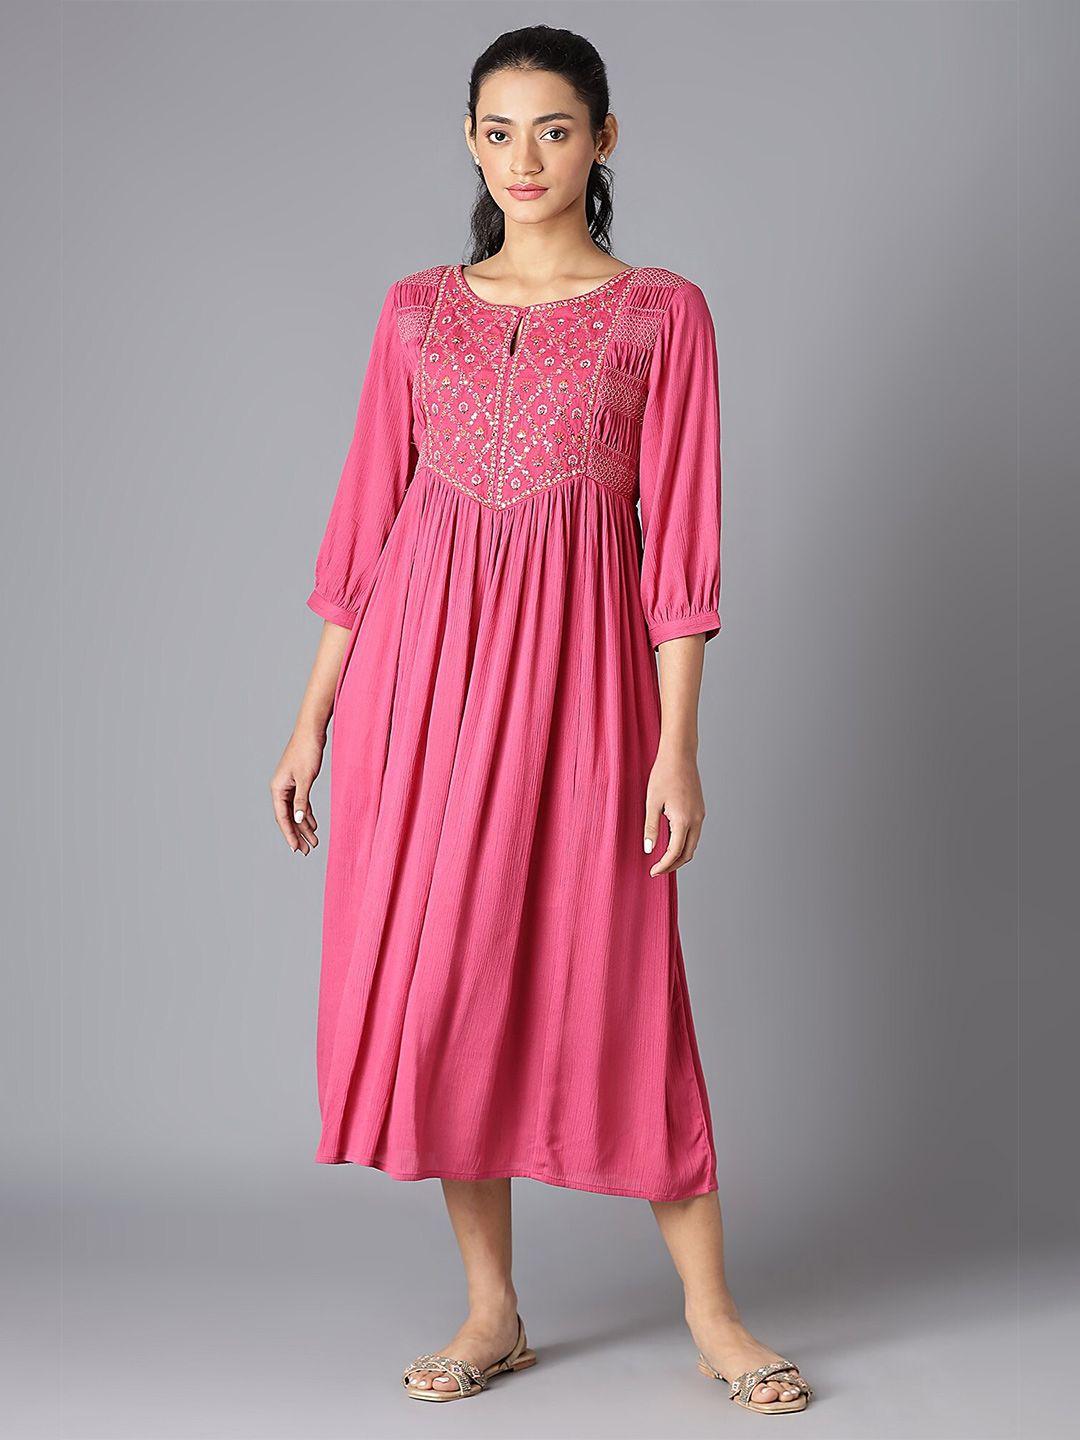 w-women-pink-embellished-keyhole-neck-ethnic-a-line-midi-dress